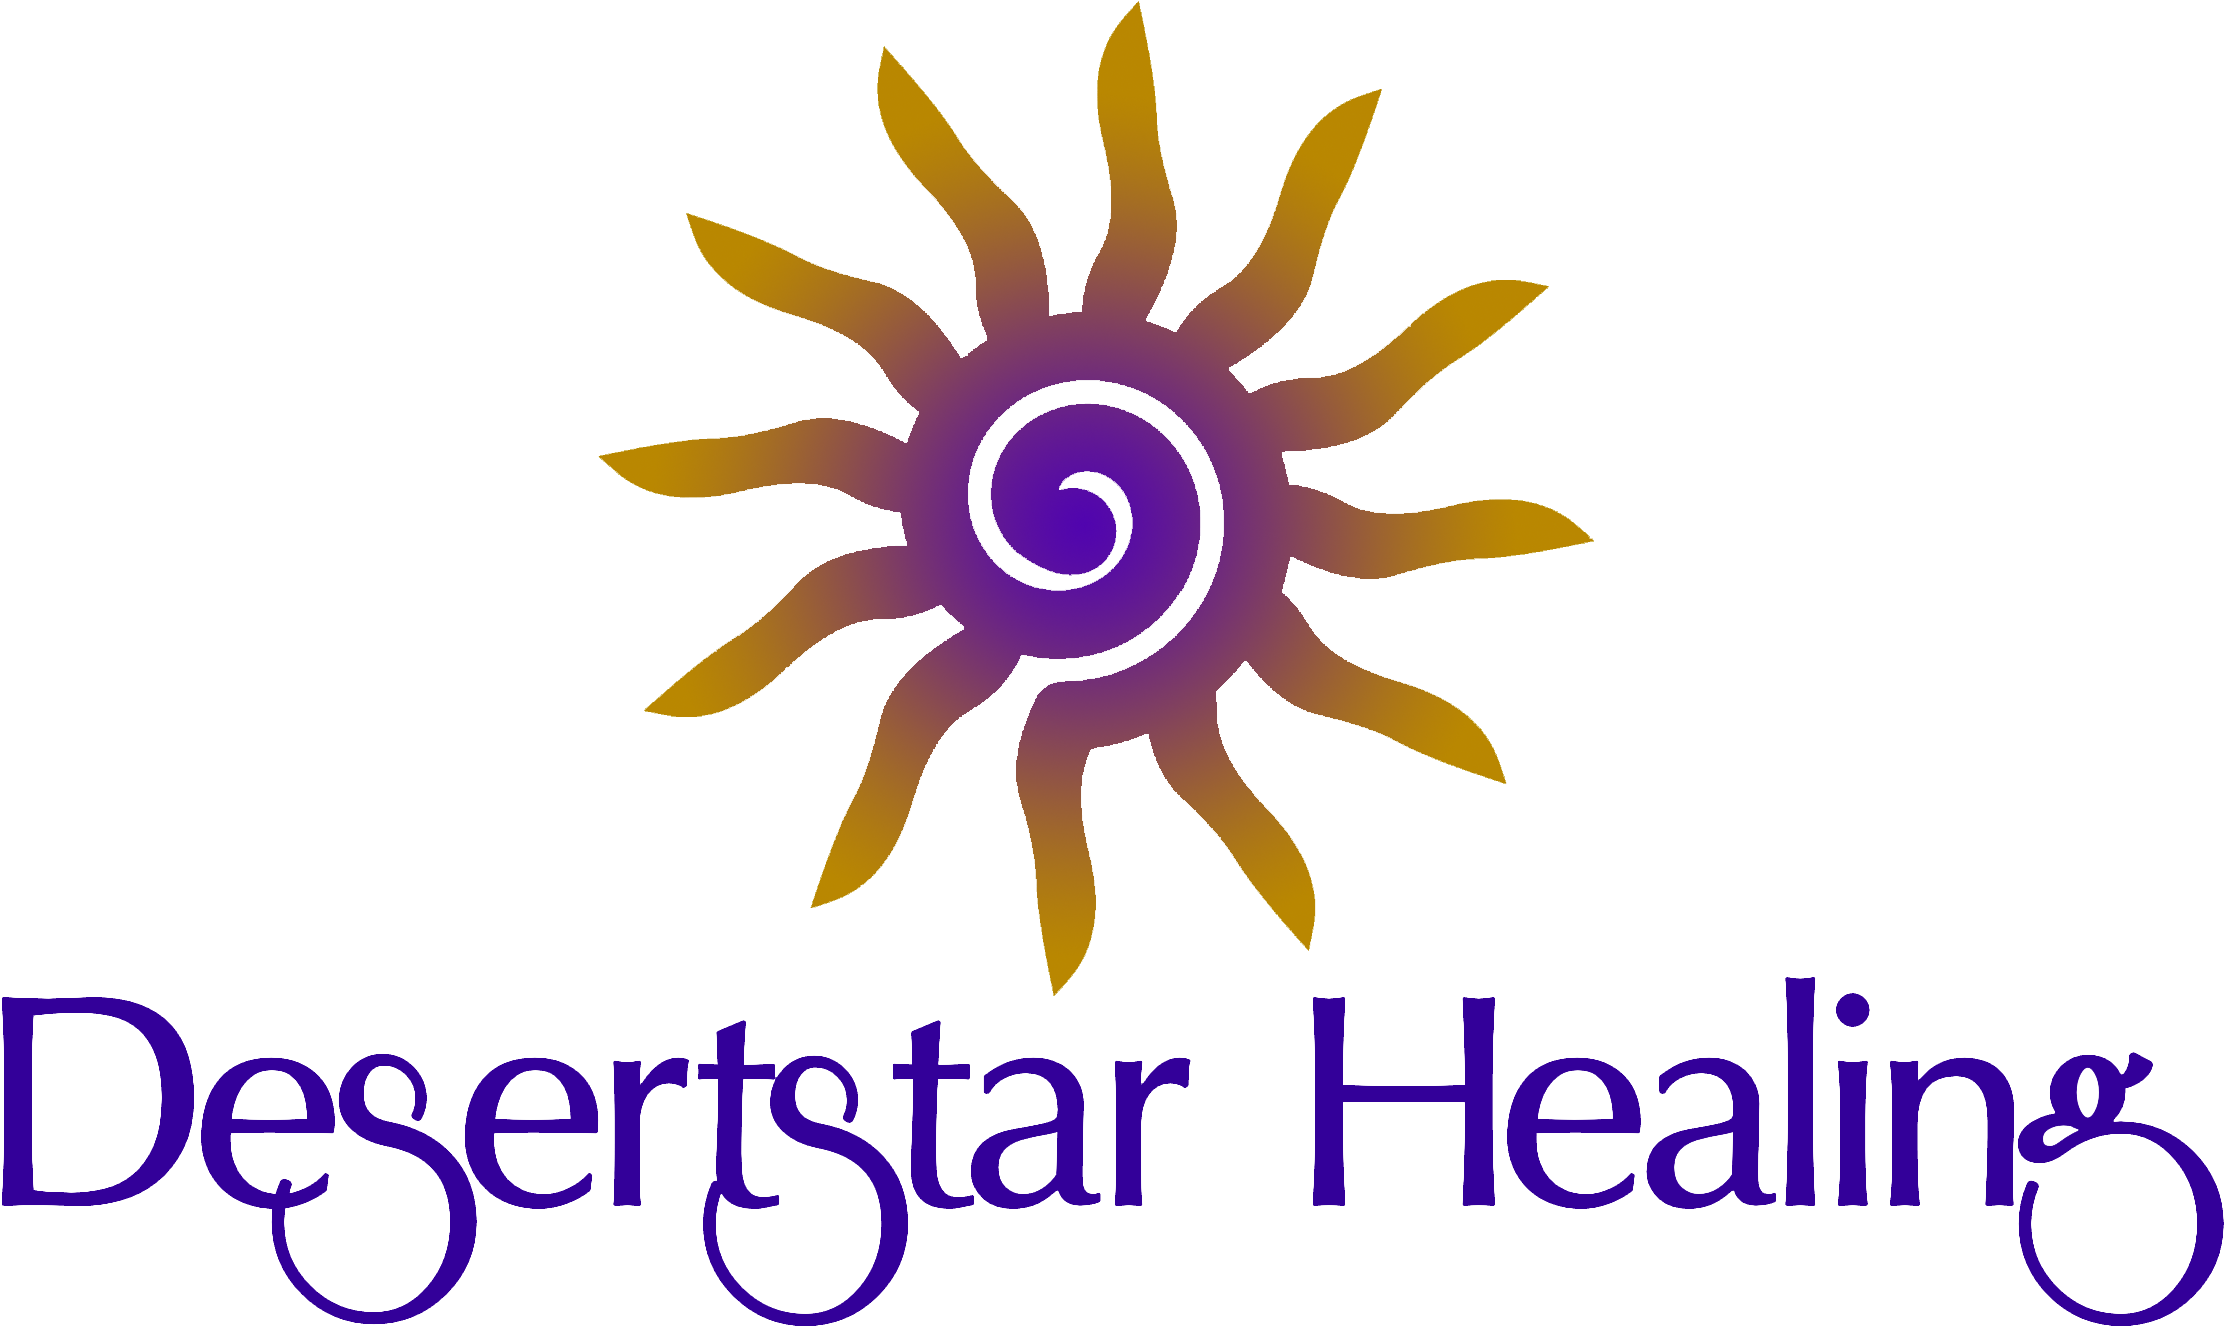 Desertstar Logo And Text Copy - National Heart Foundation Of Australia (2393x1389)